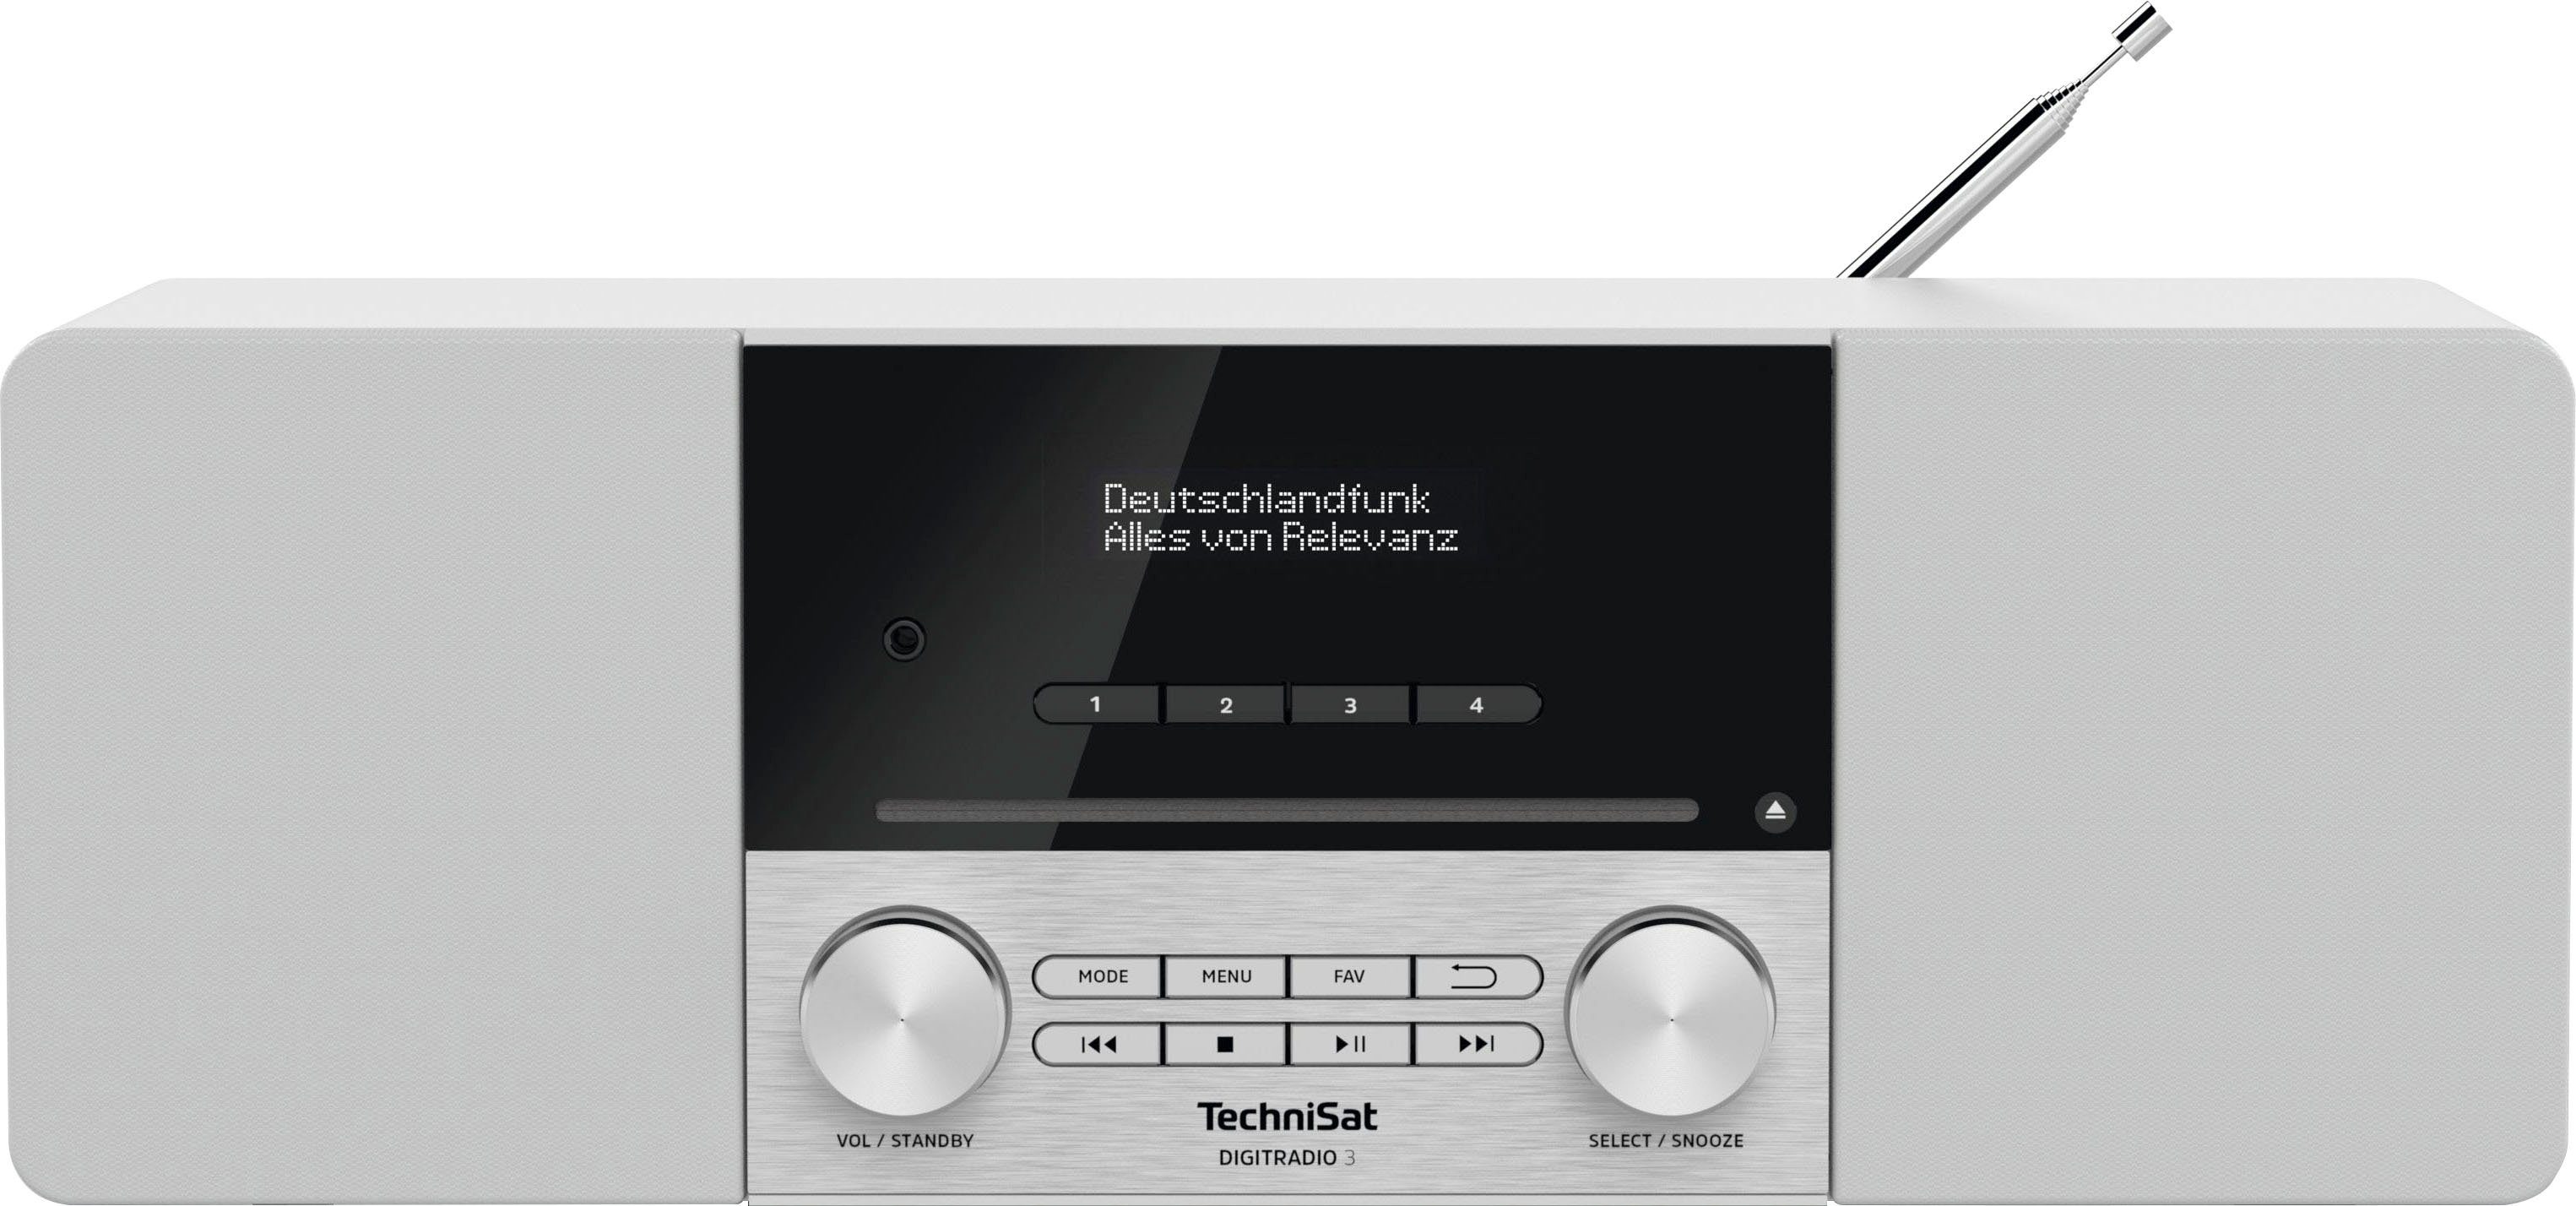 TechniSat DIGITRADIO (DAB) in Digitalradio 20 Made 3 Germany) (DAB), mit W, UKW CD-Player, RDS, (Digitalradio weiß